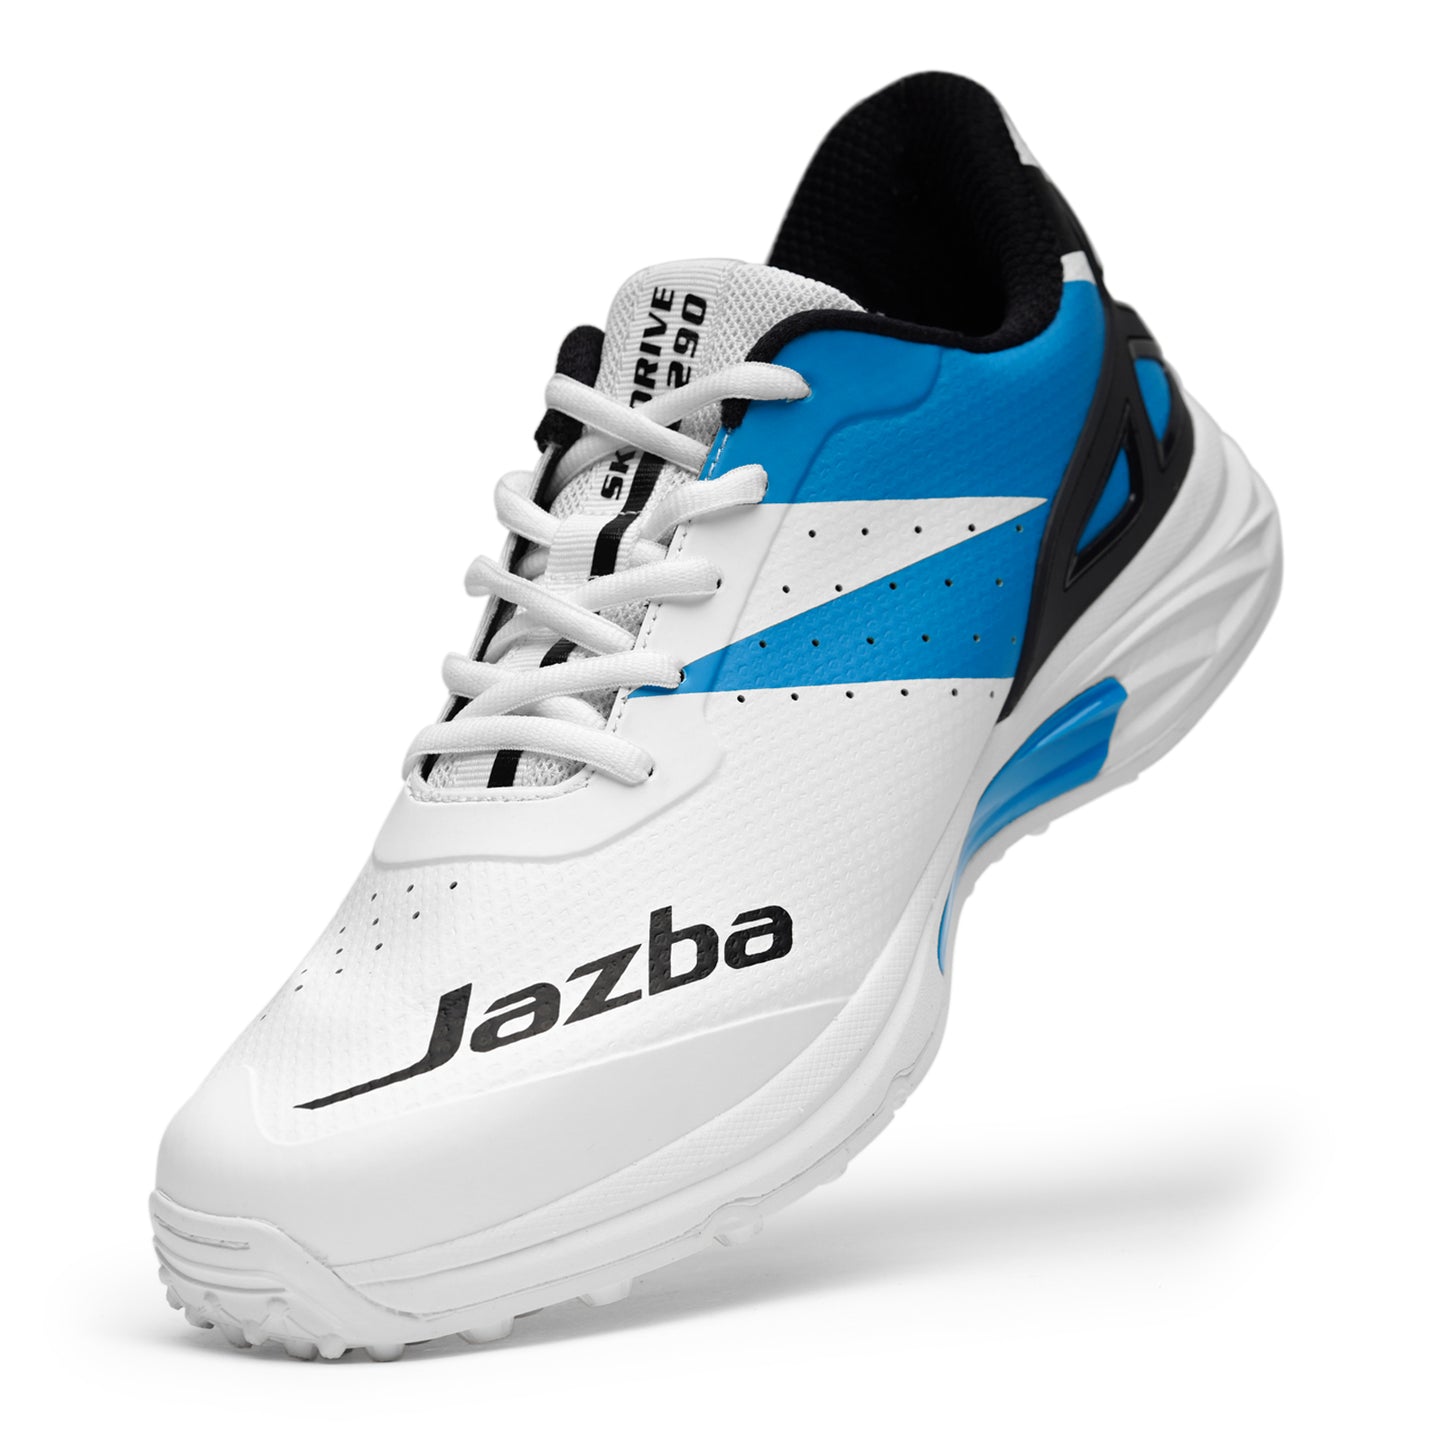 Jazba Cricket Shoe SkyDrive 290